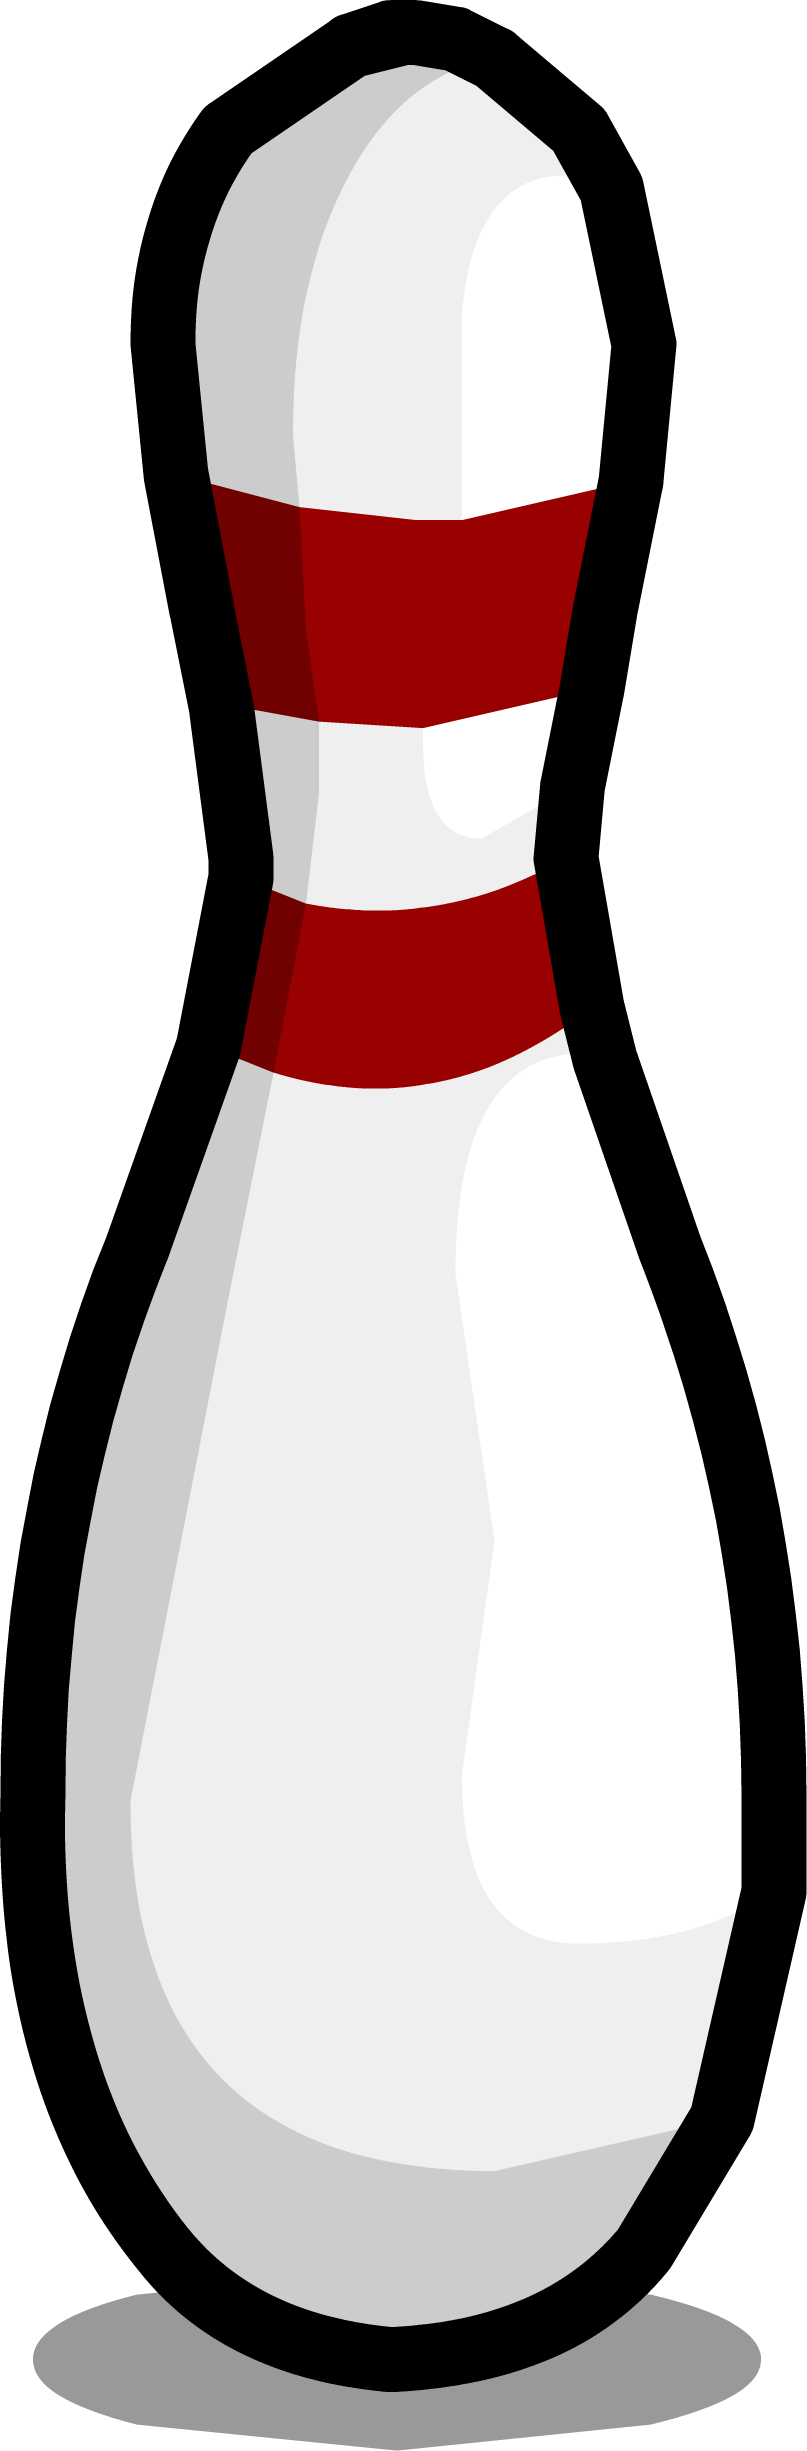 Club Penguin Wiki - Bowling Pin Sprite (807x2451)